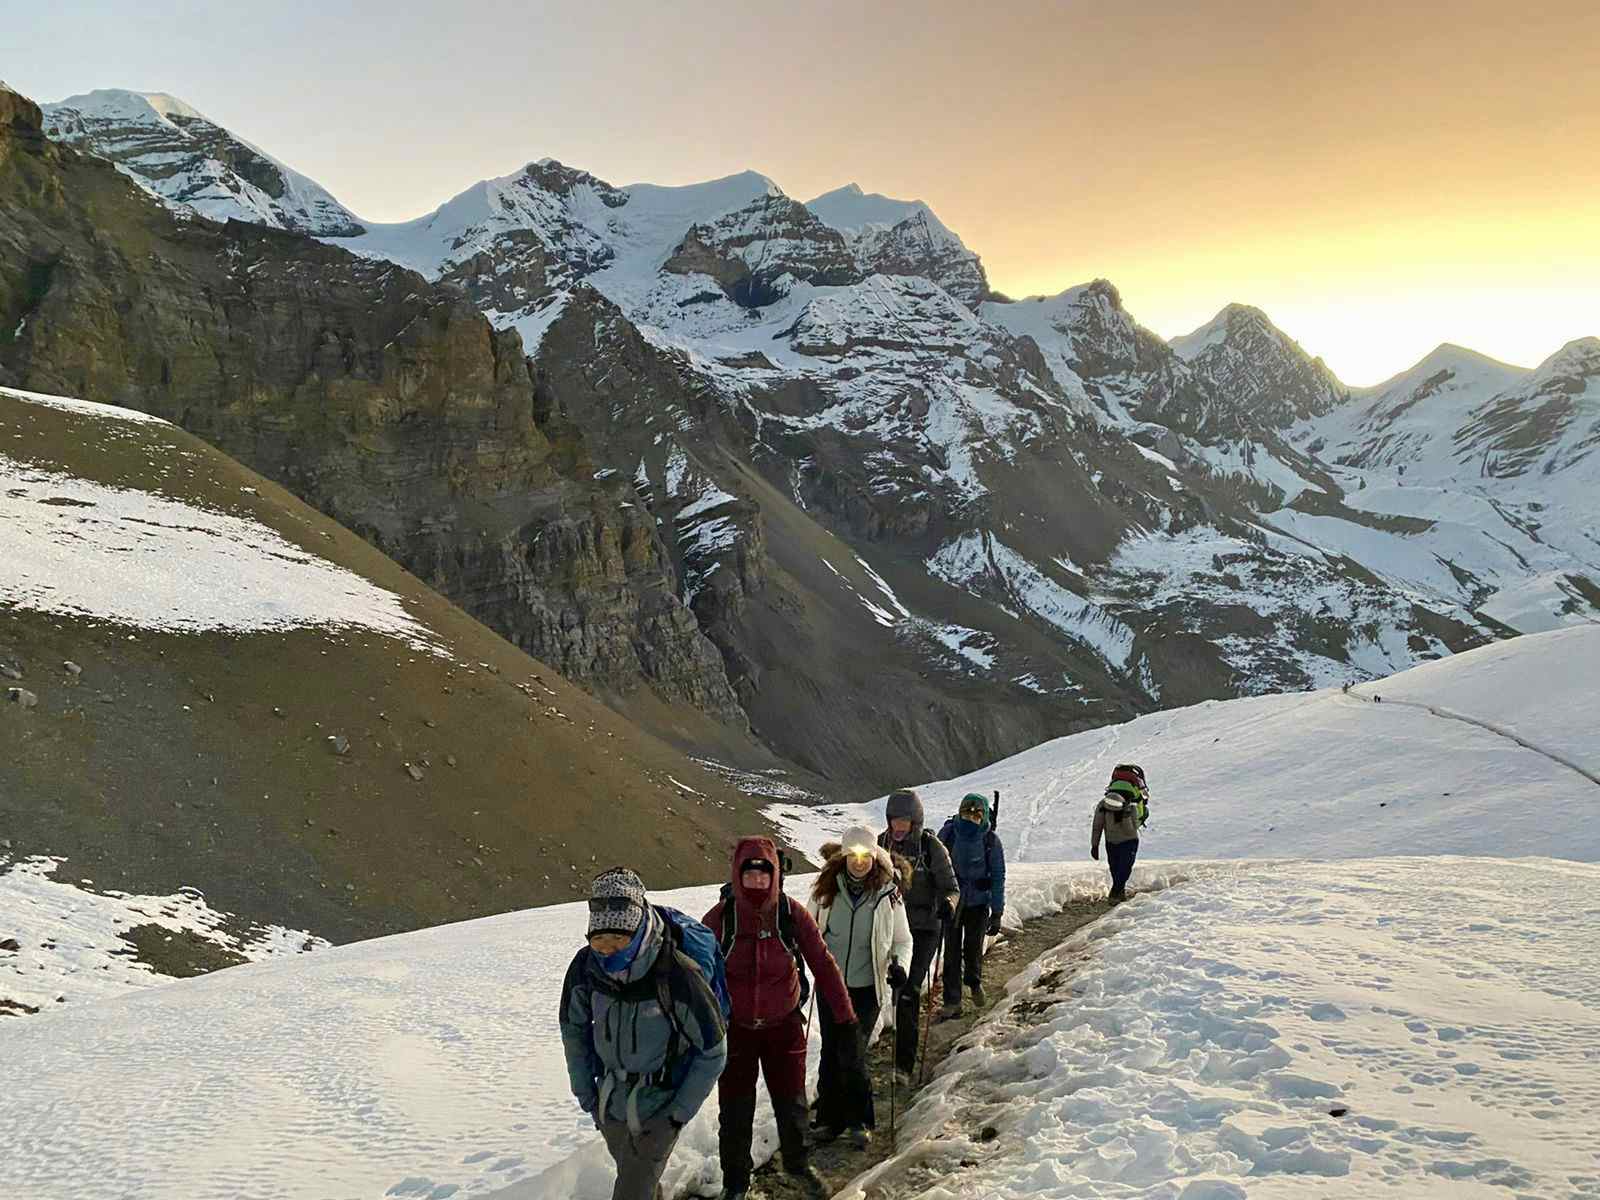 Trekkers on a trail in the snow at sunrise, Annapurna Circuit Trek, Nepal. 